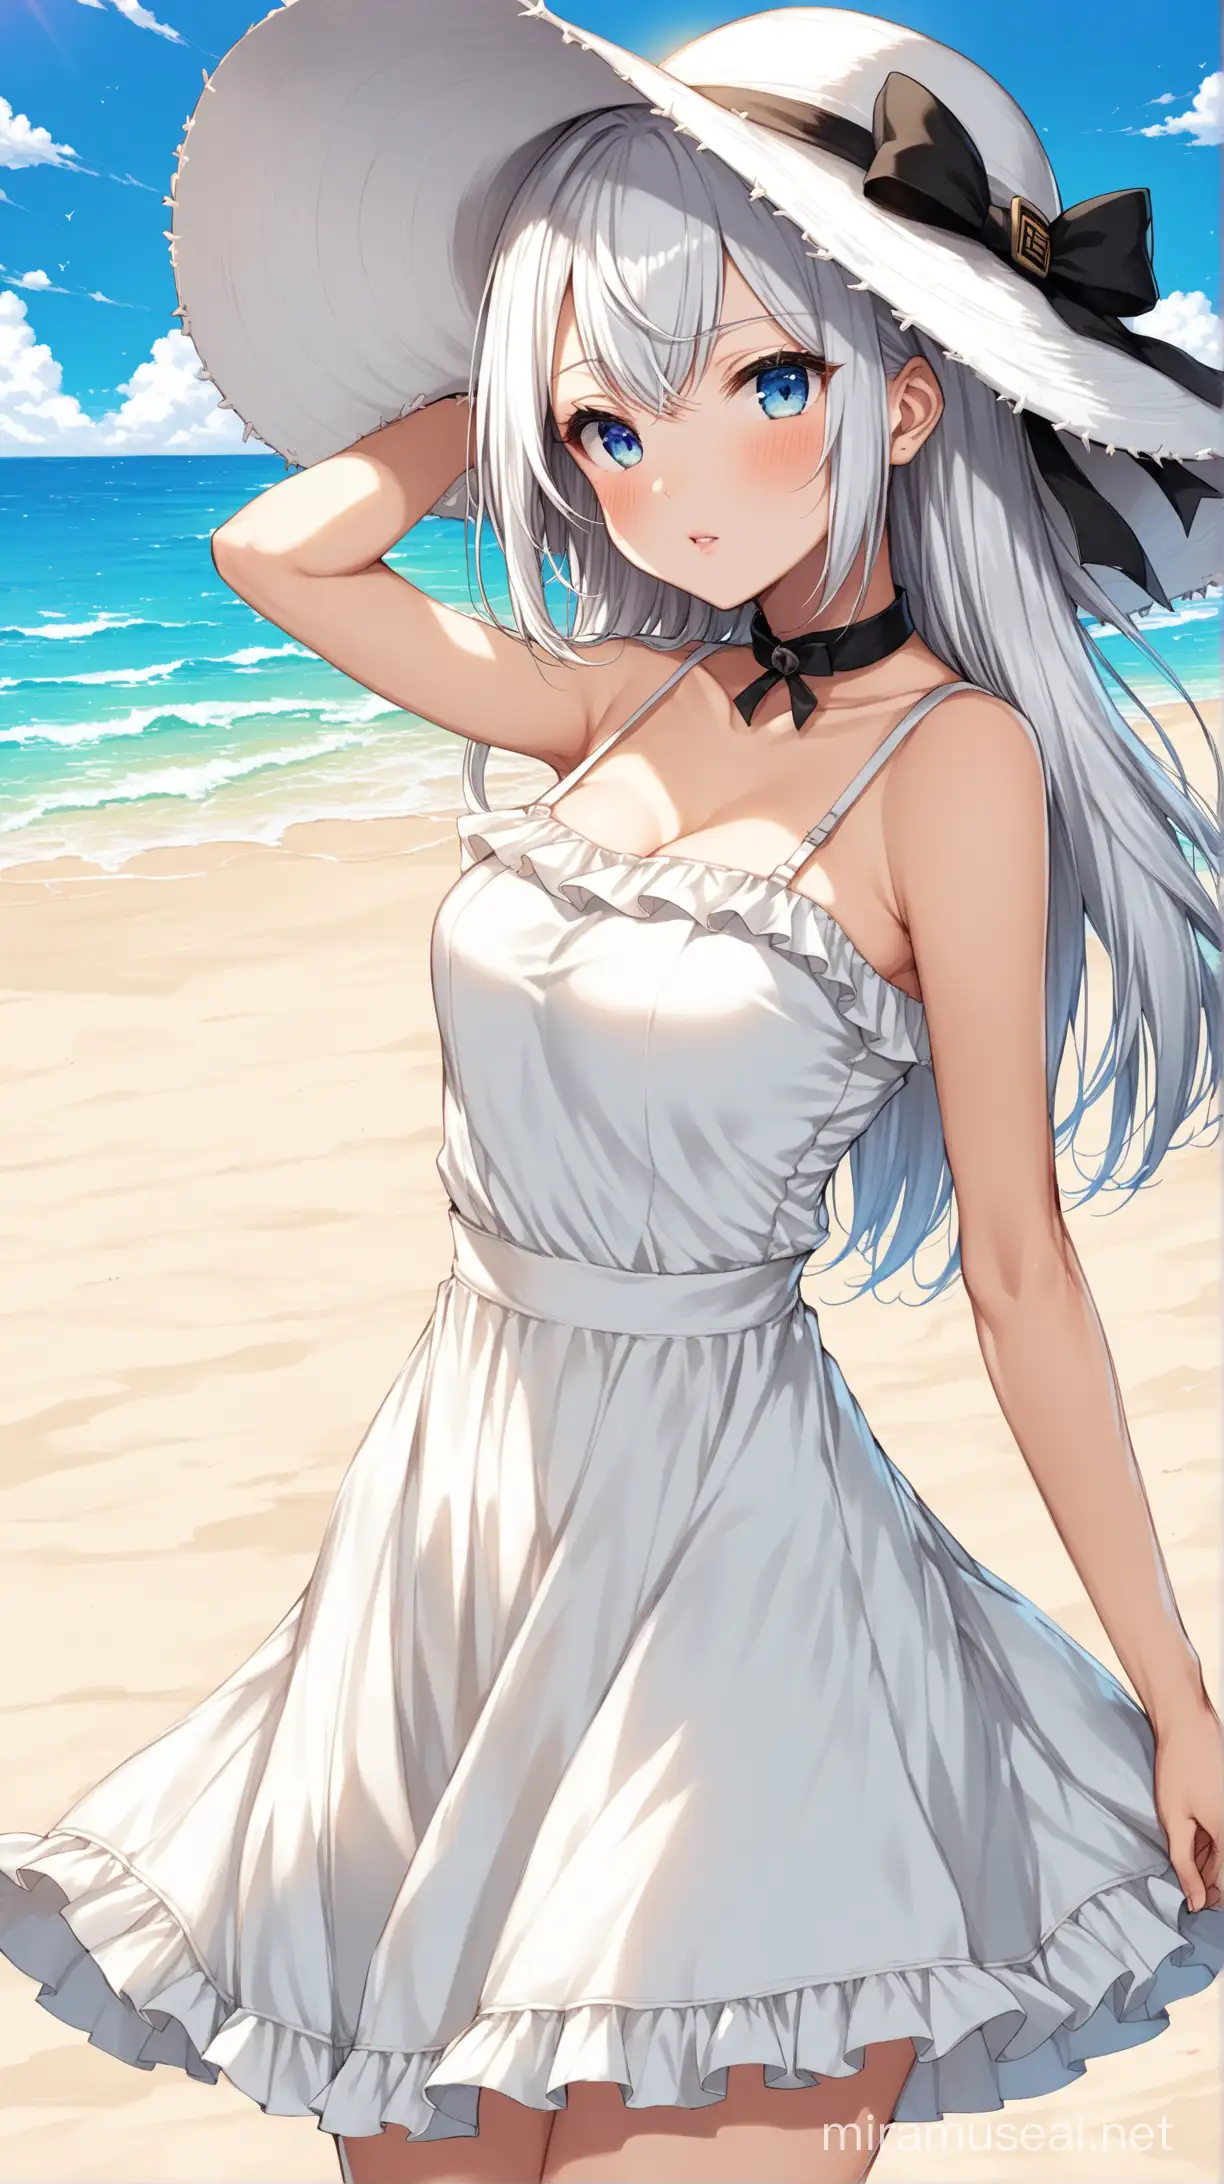 Aesthetic ((Kei Shirogane/Kaguya-sama: Love is War)), ((long silver white hair)), ((blue eyes)), a white sundress with thin straps, skirt ruffles, ((wearing a large brim white floppy beach hat))